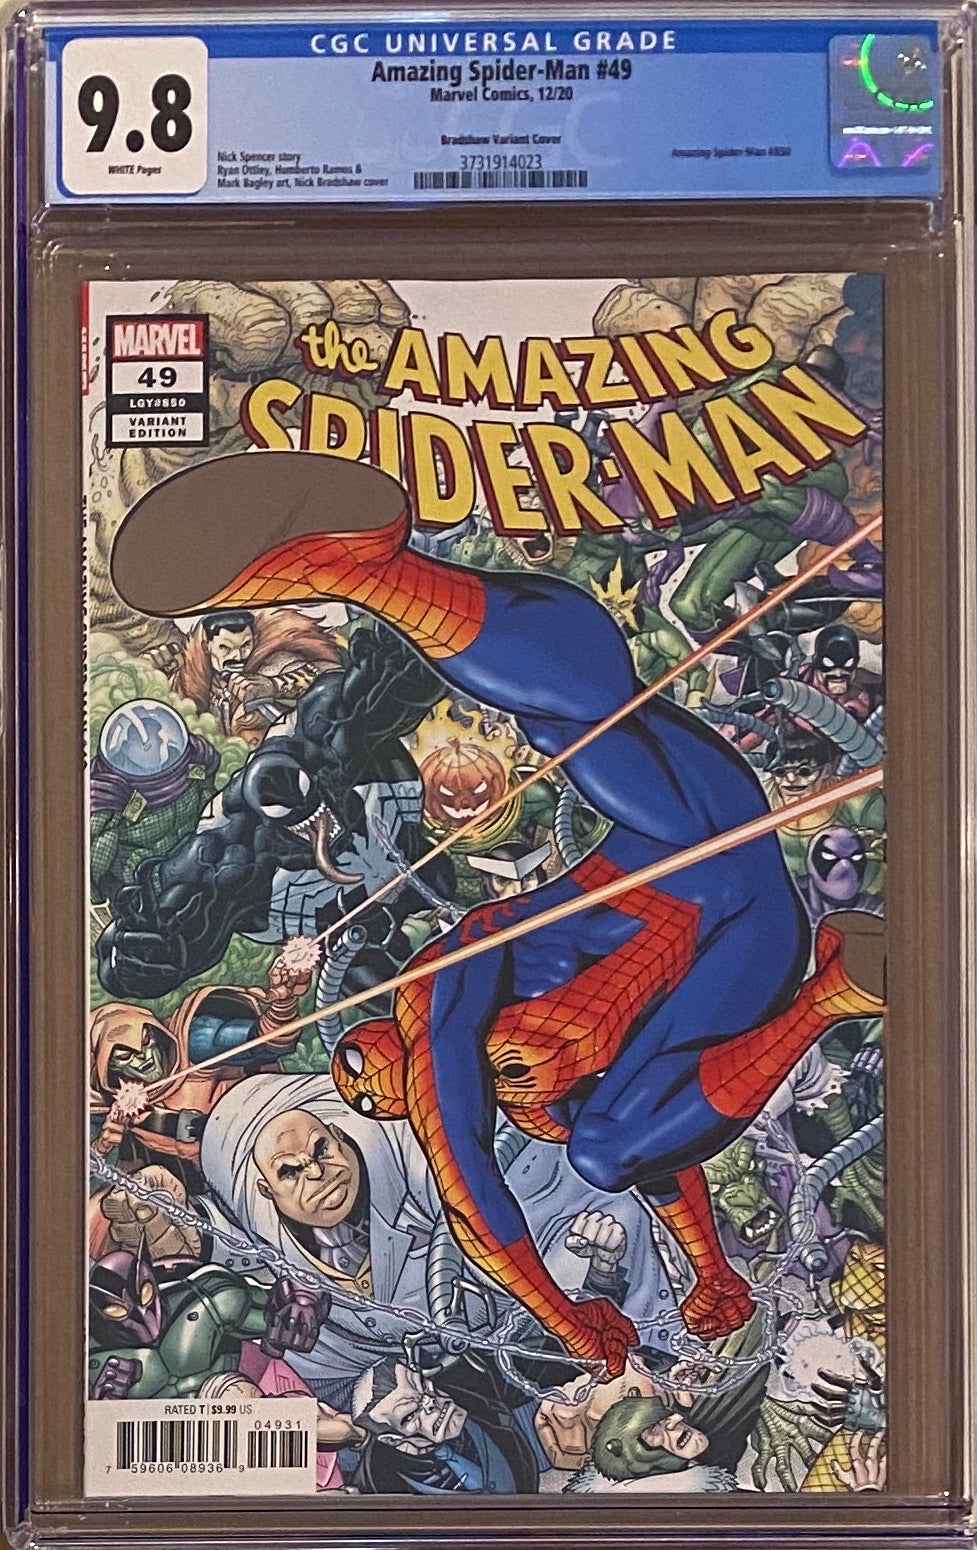 Amazing Spider-Man #850 (#49) Bradshaw Variant CGC 9.8